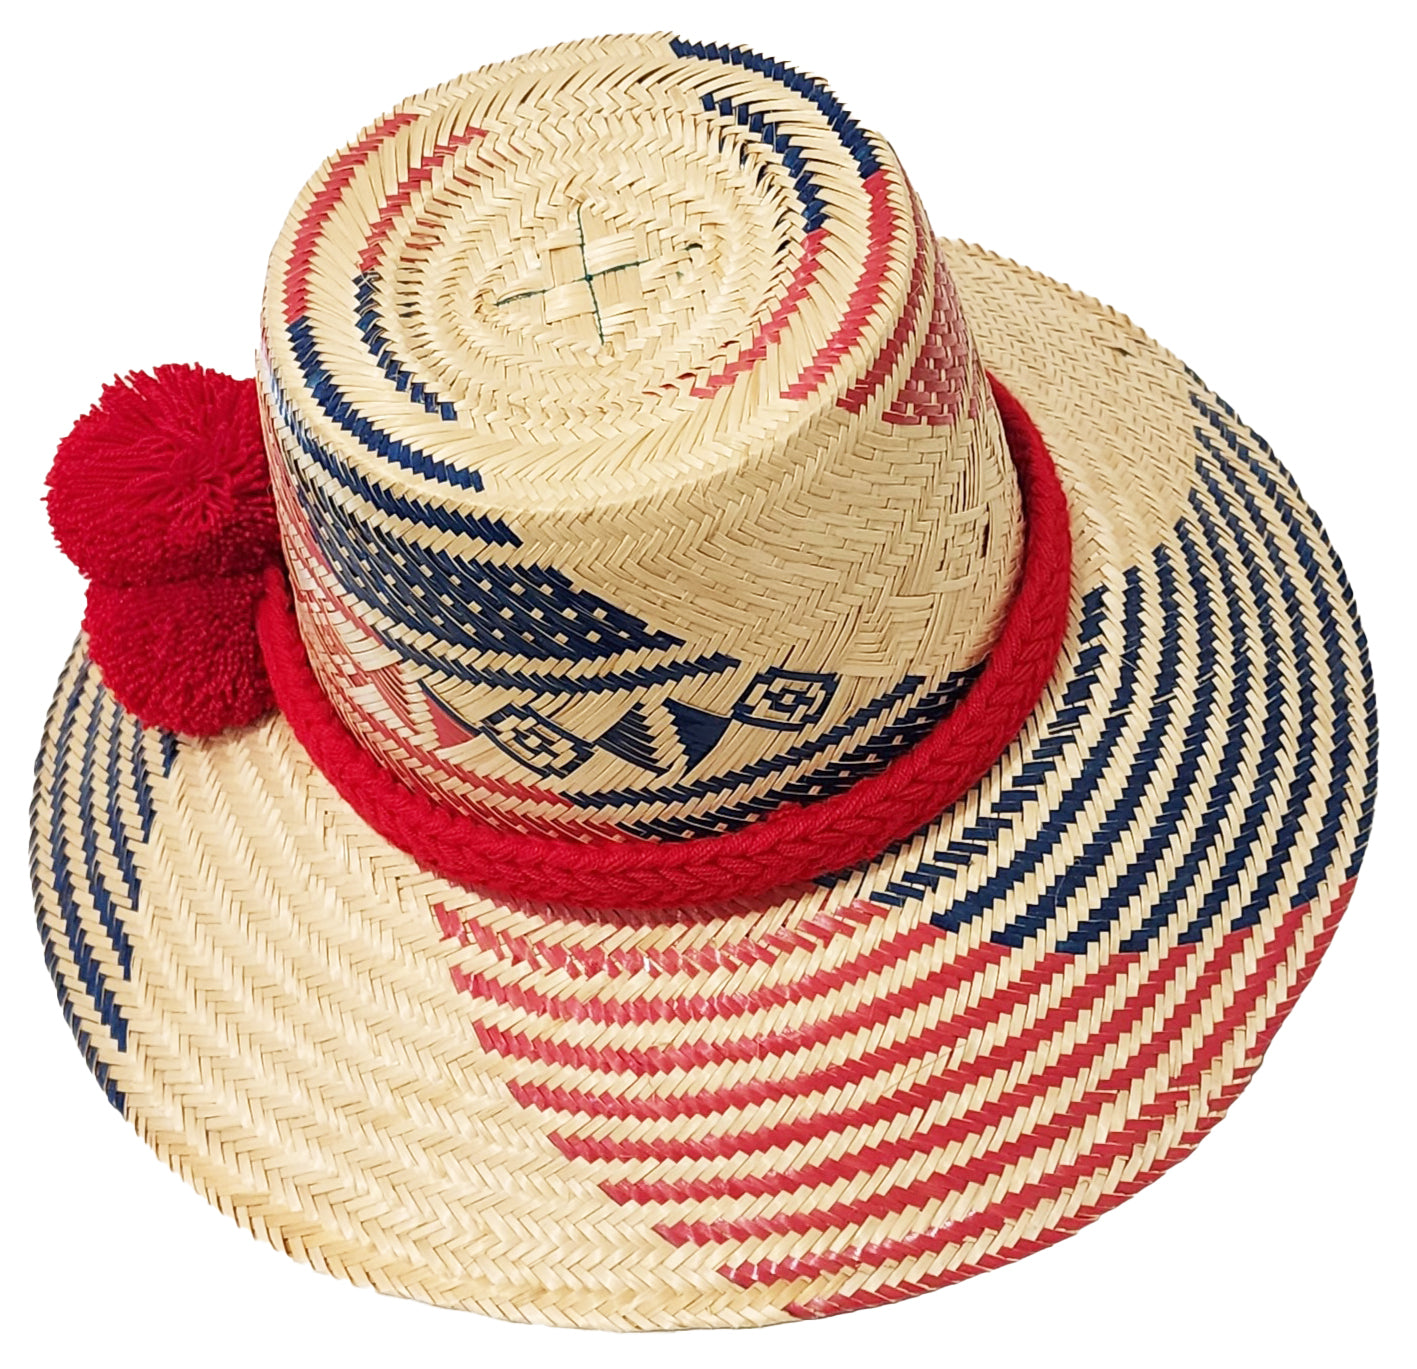 Everleigh Handmade Wayuu Hat - top